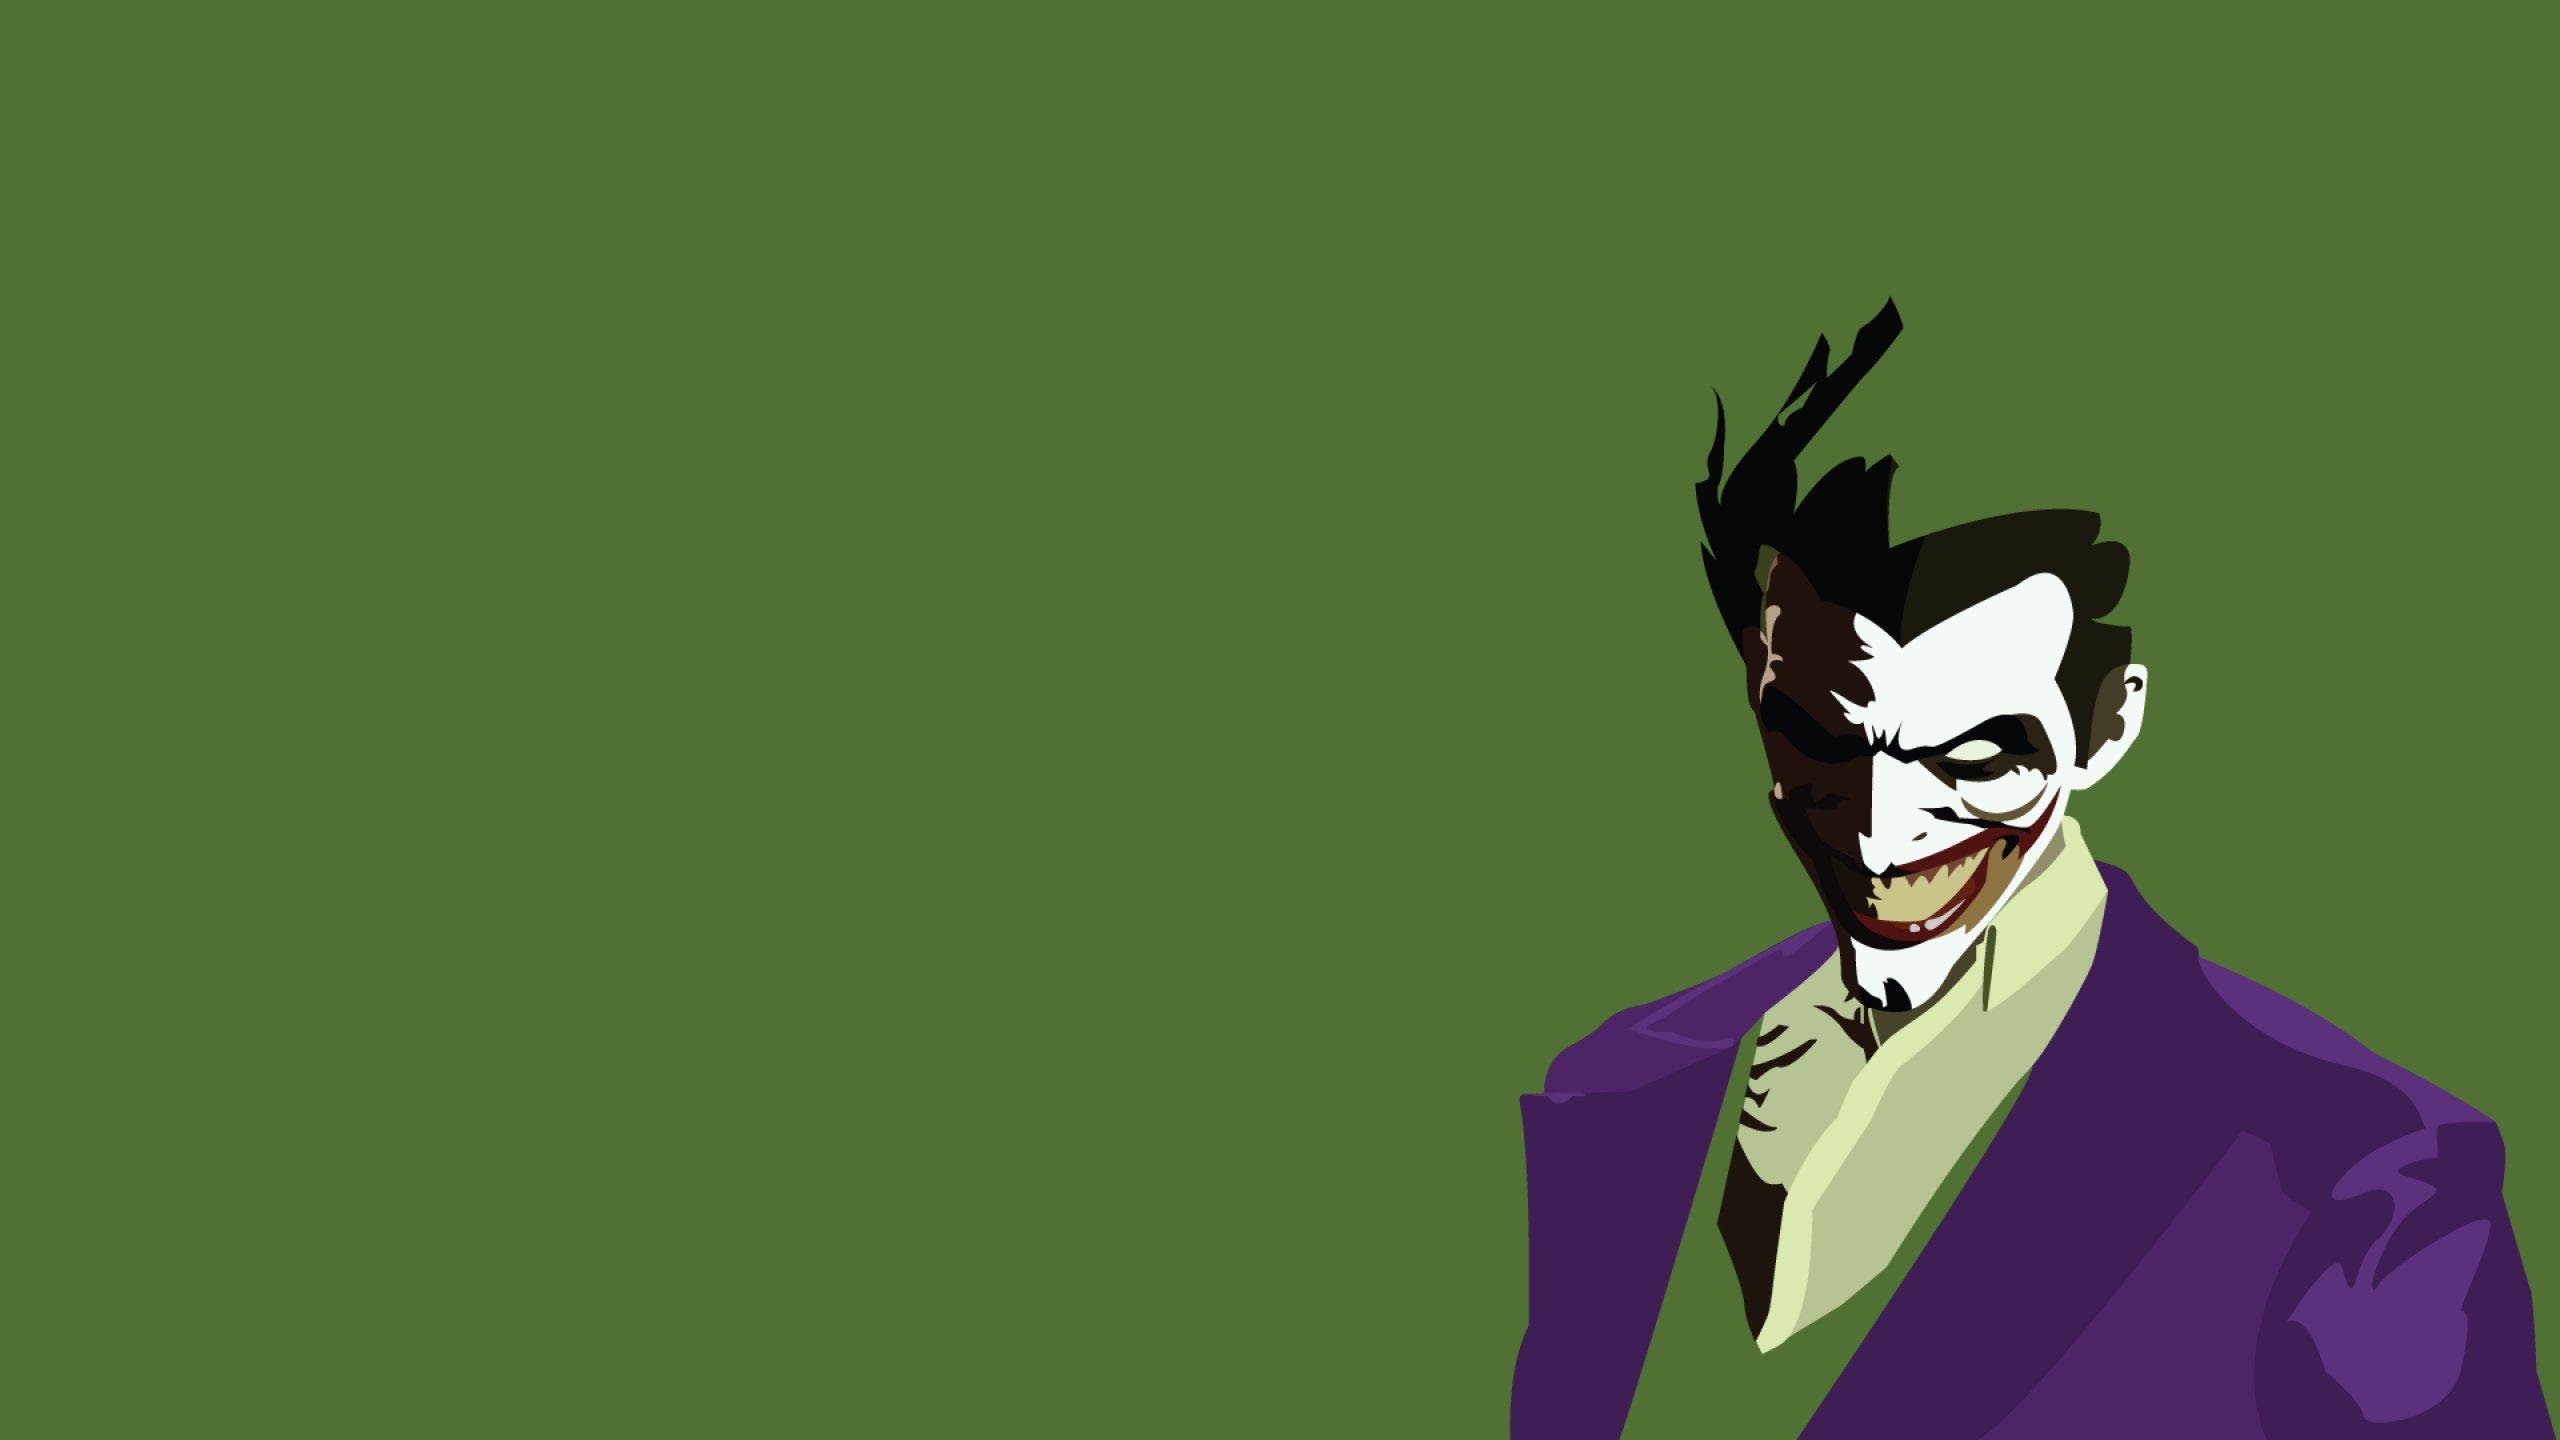 The Joker Comic Wallpapers - Top Free The Joker Comic Backgrounds